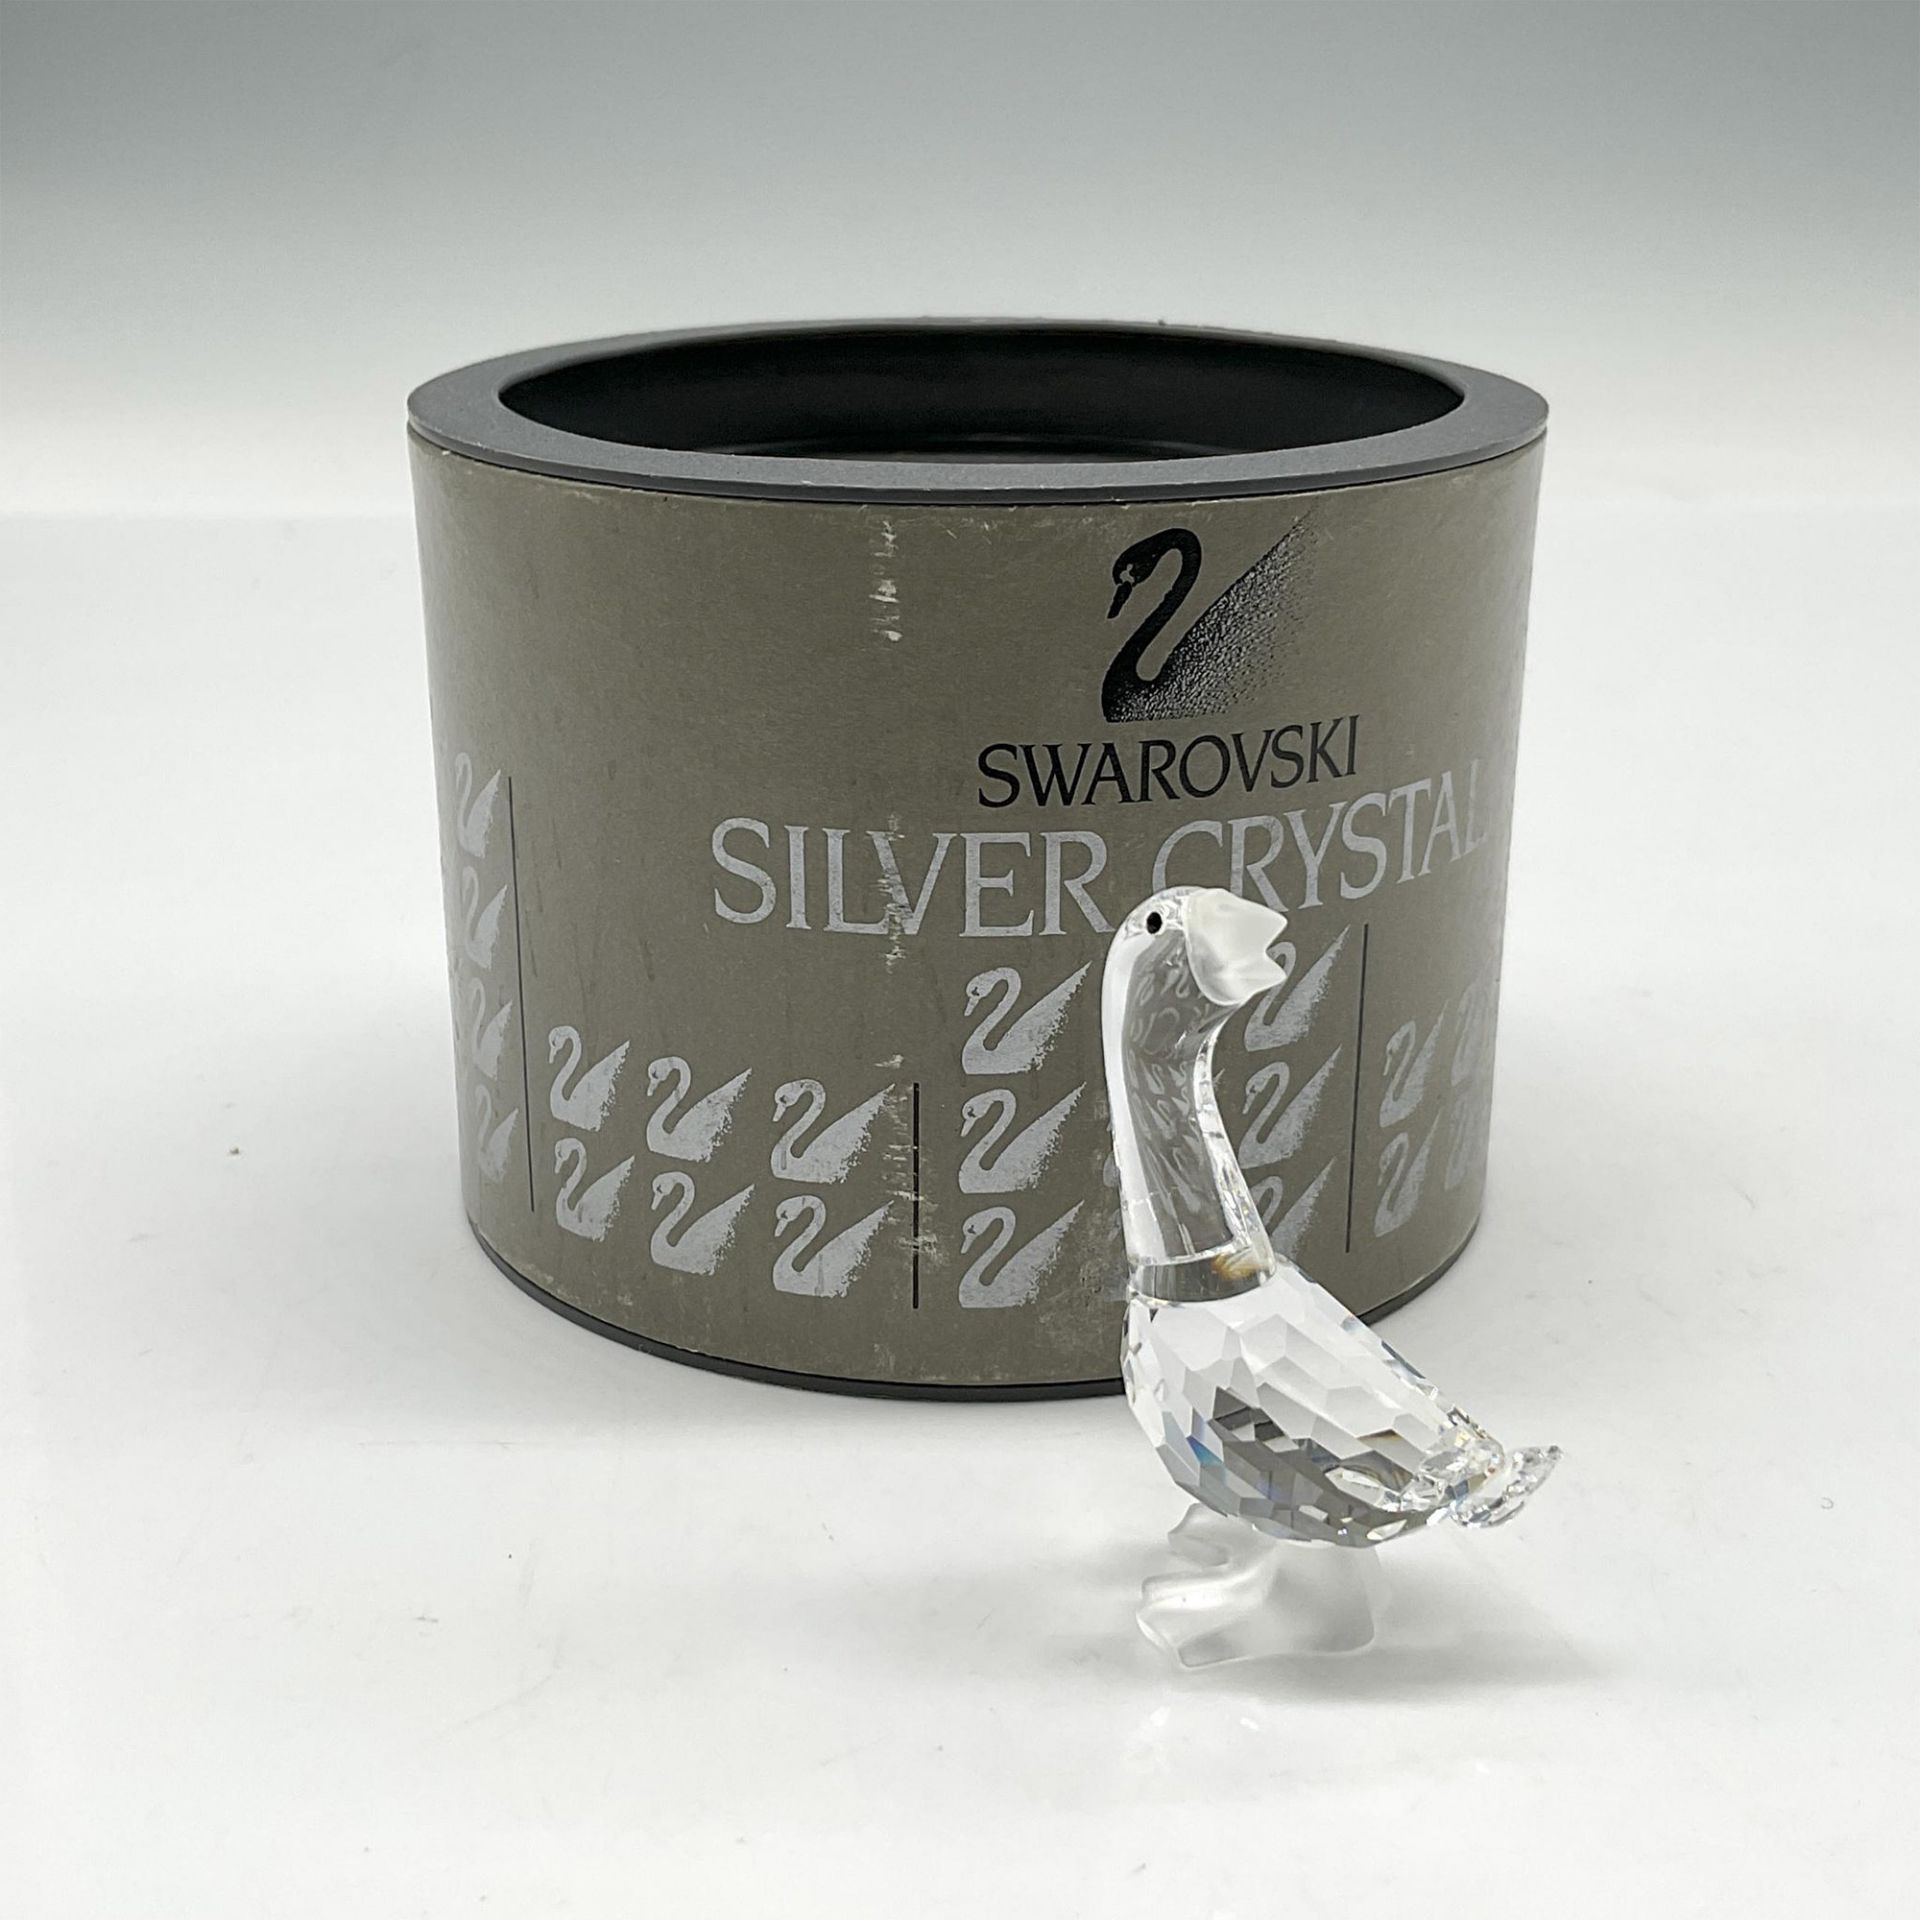 Swarovski Silver Crystal, Gosling Dick - Image 4 of 4